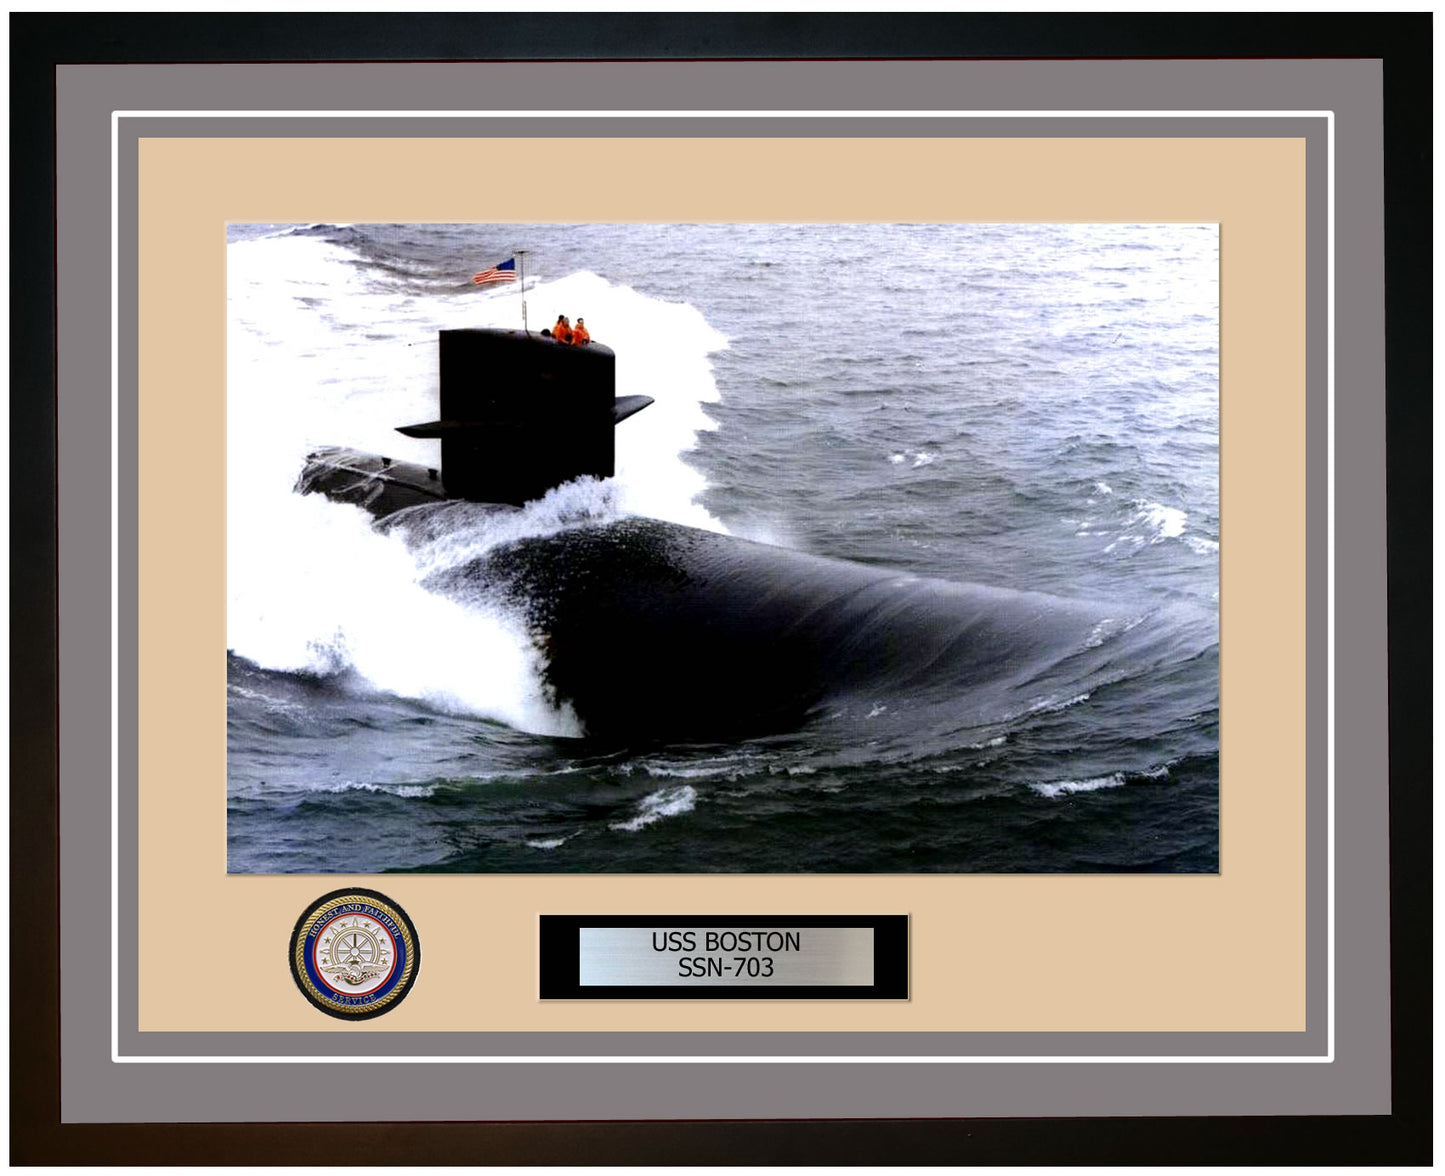 USS Boston SSN-703 Framed Navy Ship Photo Grey